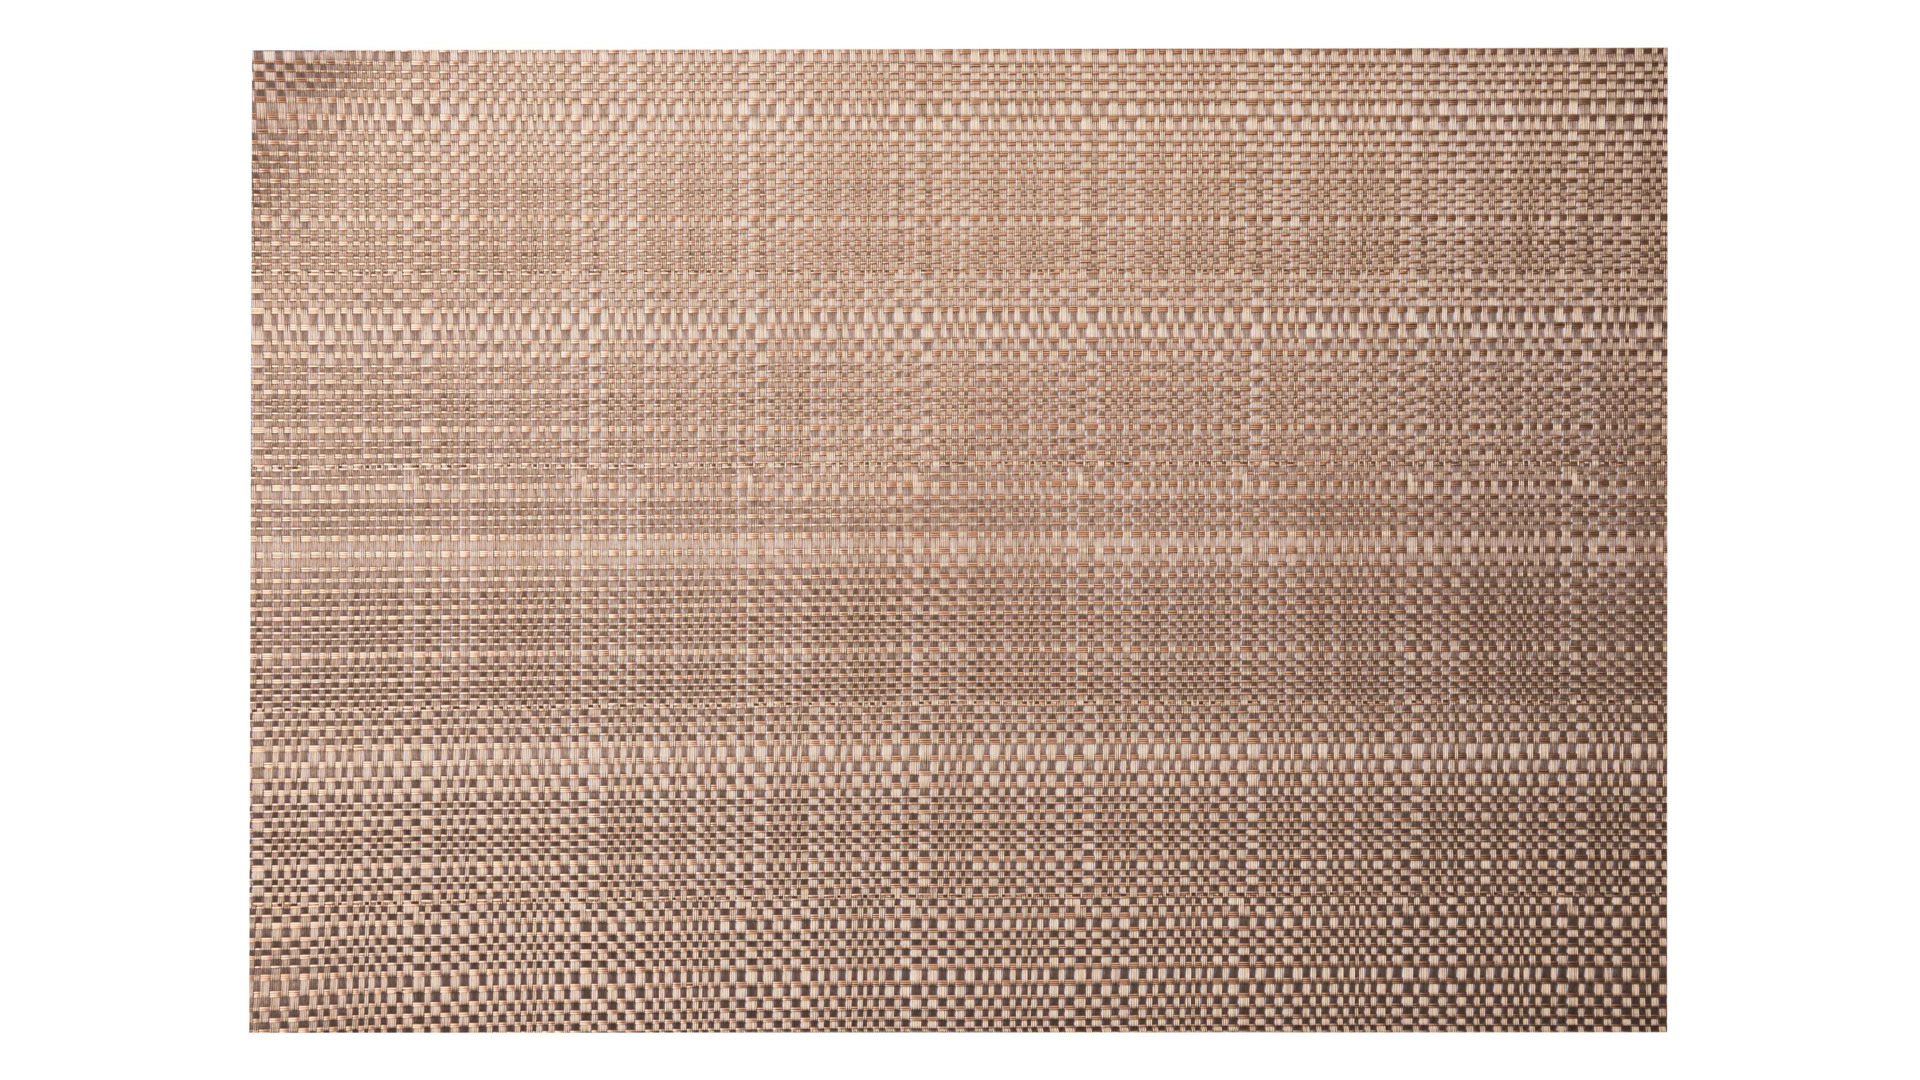 Салфетка подстановочная прямоугольная WO HOME NATURAL 33х48 см, двусторонняя, коричневая